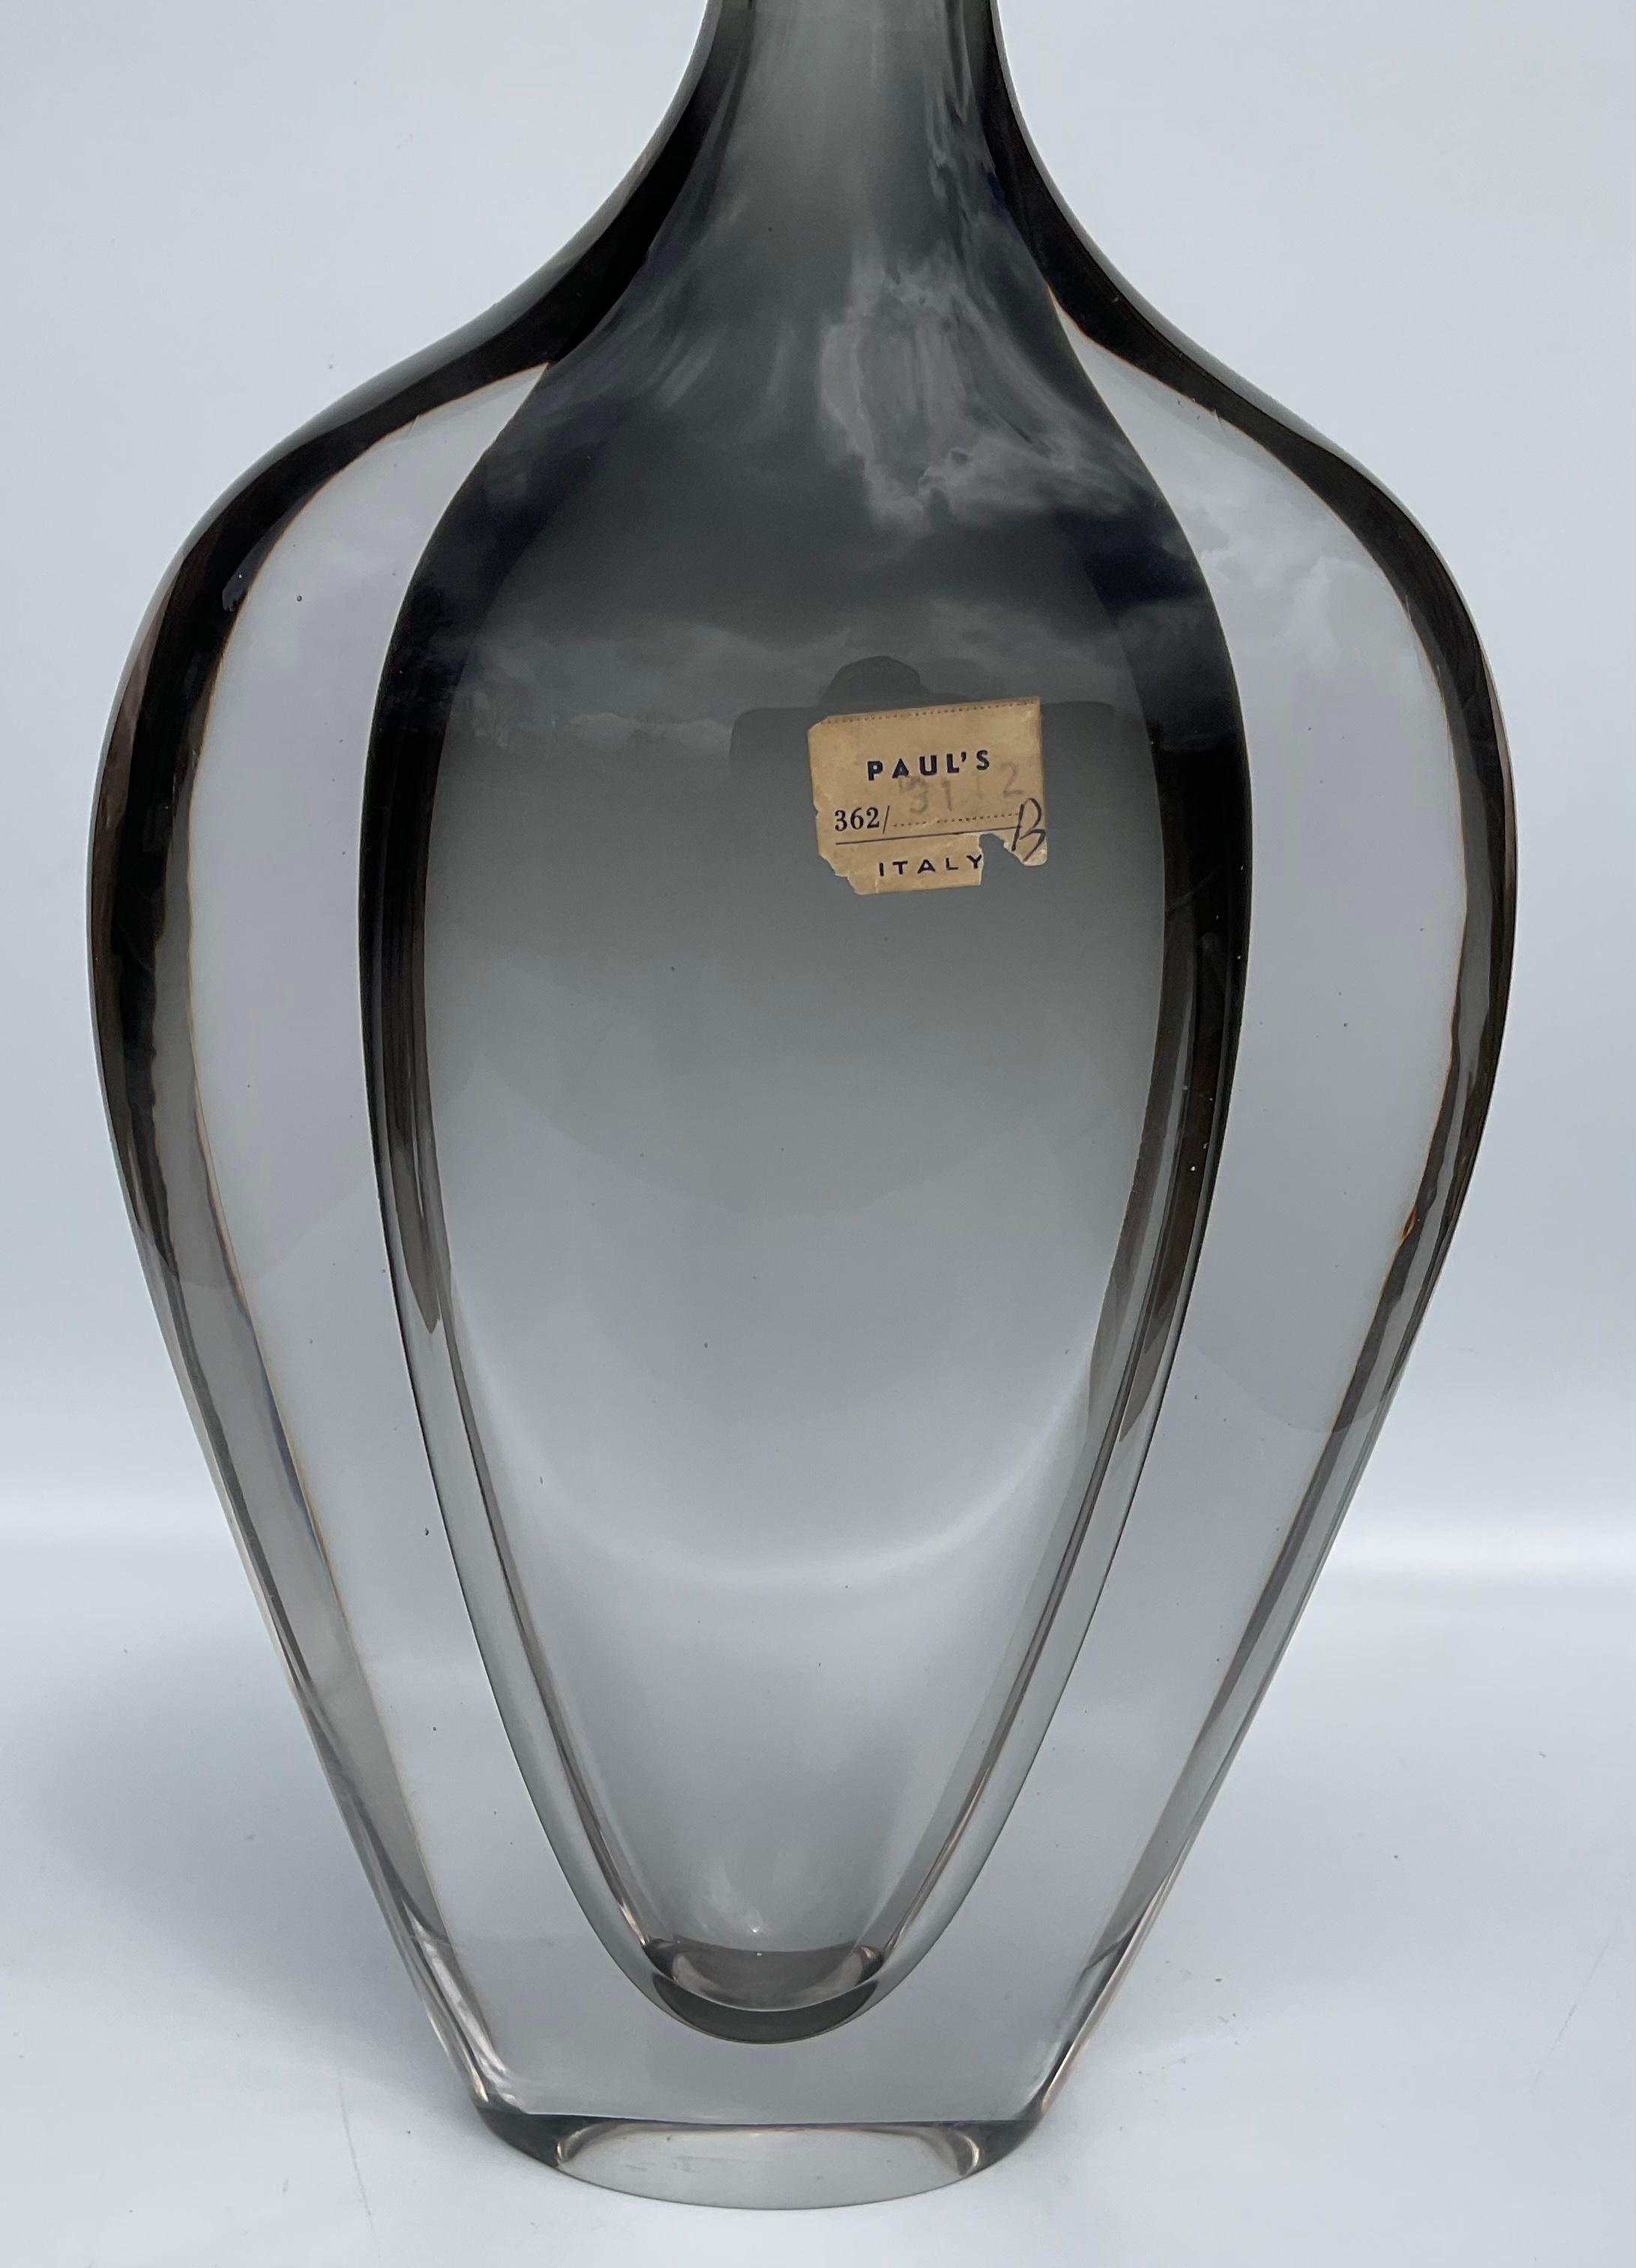 Large Flavio Poli Seguso Vetri D’Arte Attributed Sommerso Art Glass Murano vase. Retains its original Paul’s distributor label. Very sleek and elegant design.